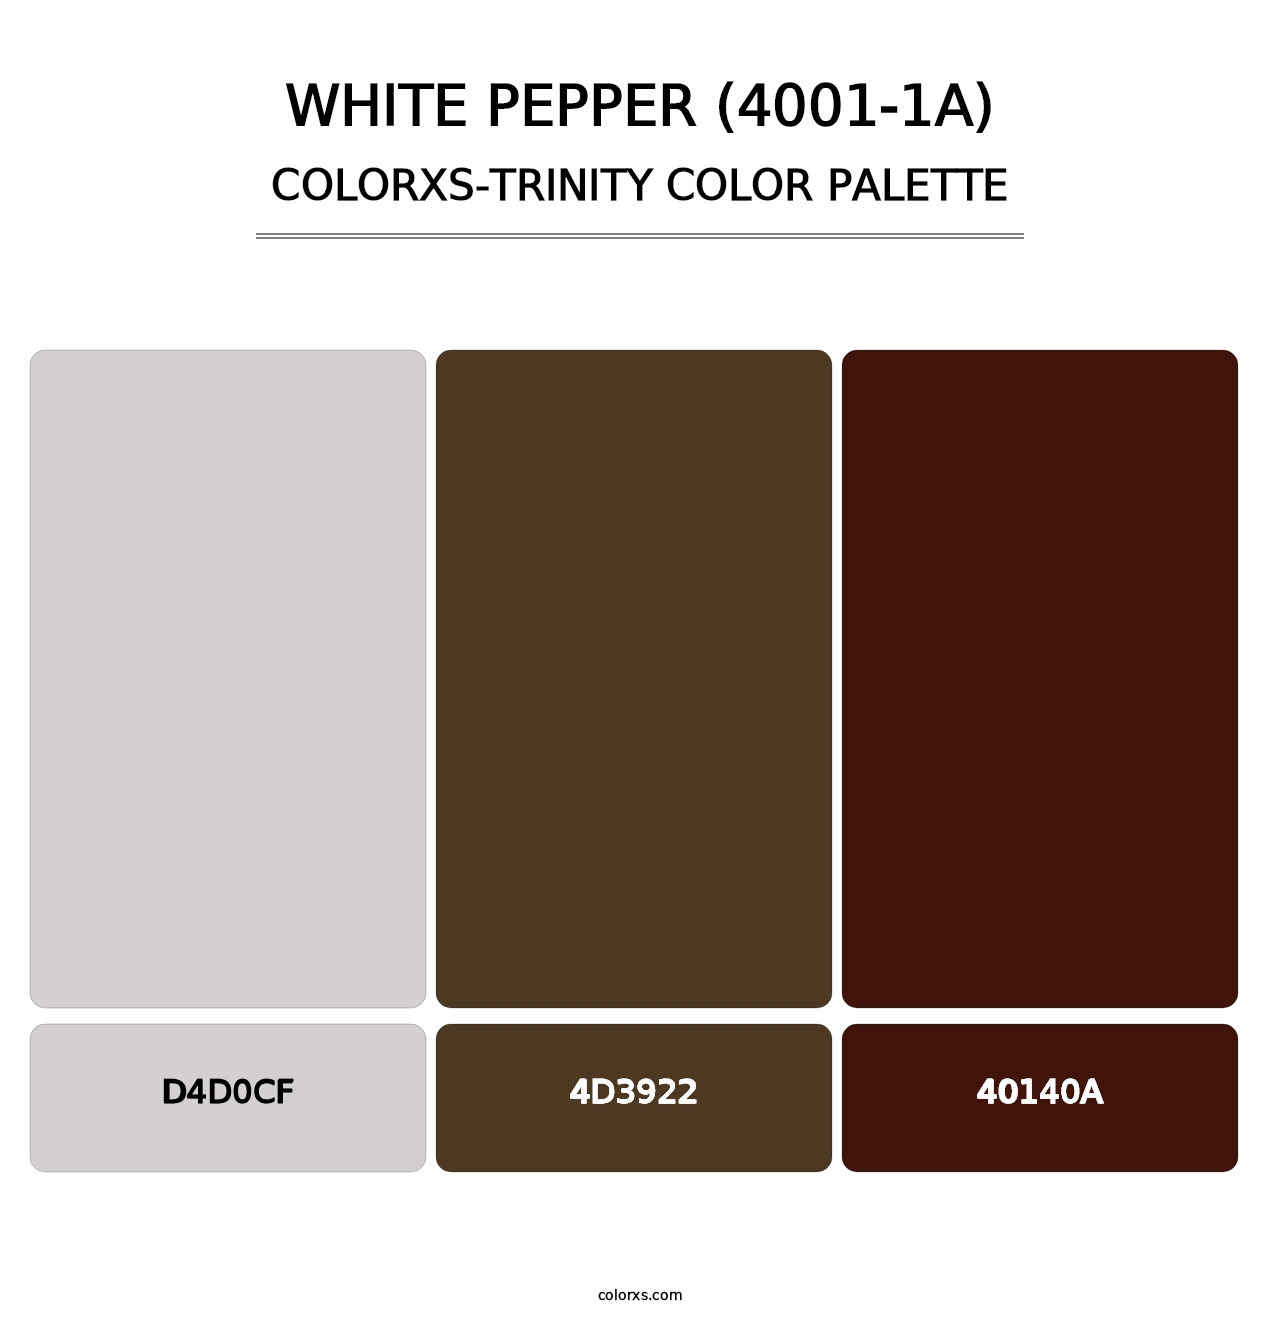 White Pepper (4001-1A) - Colorxs Trinity Palette